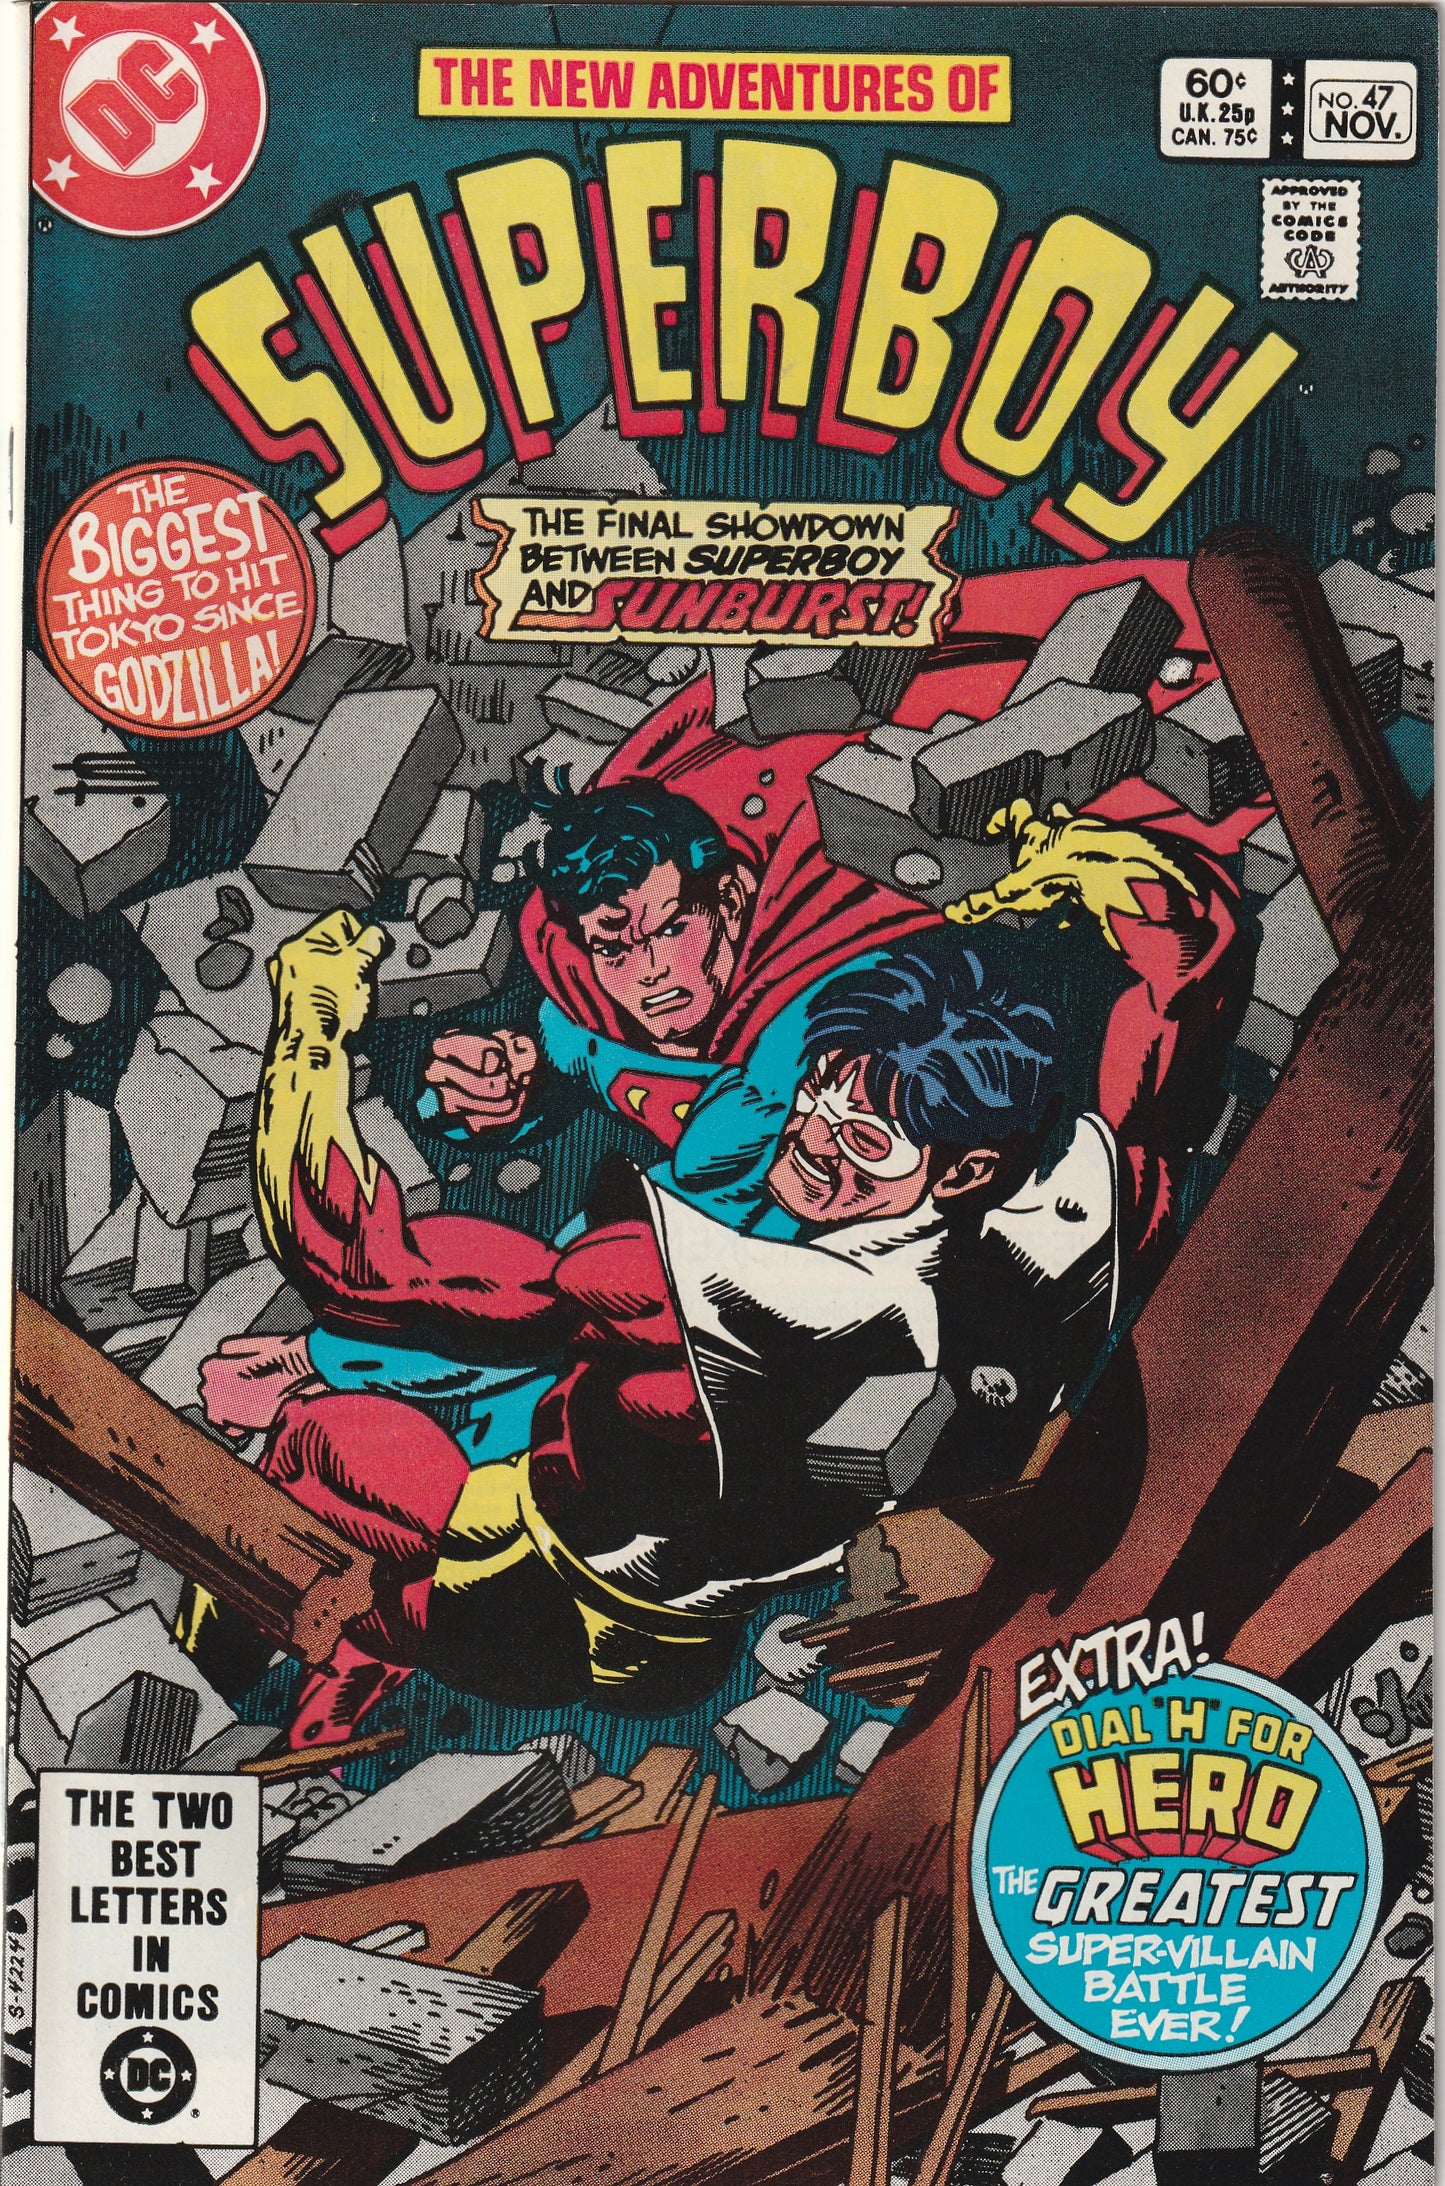 New Adventures of Superboy #47 (1983)